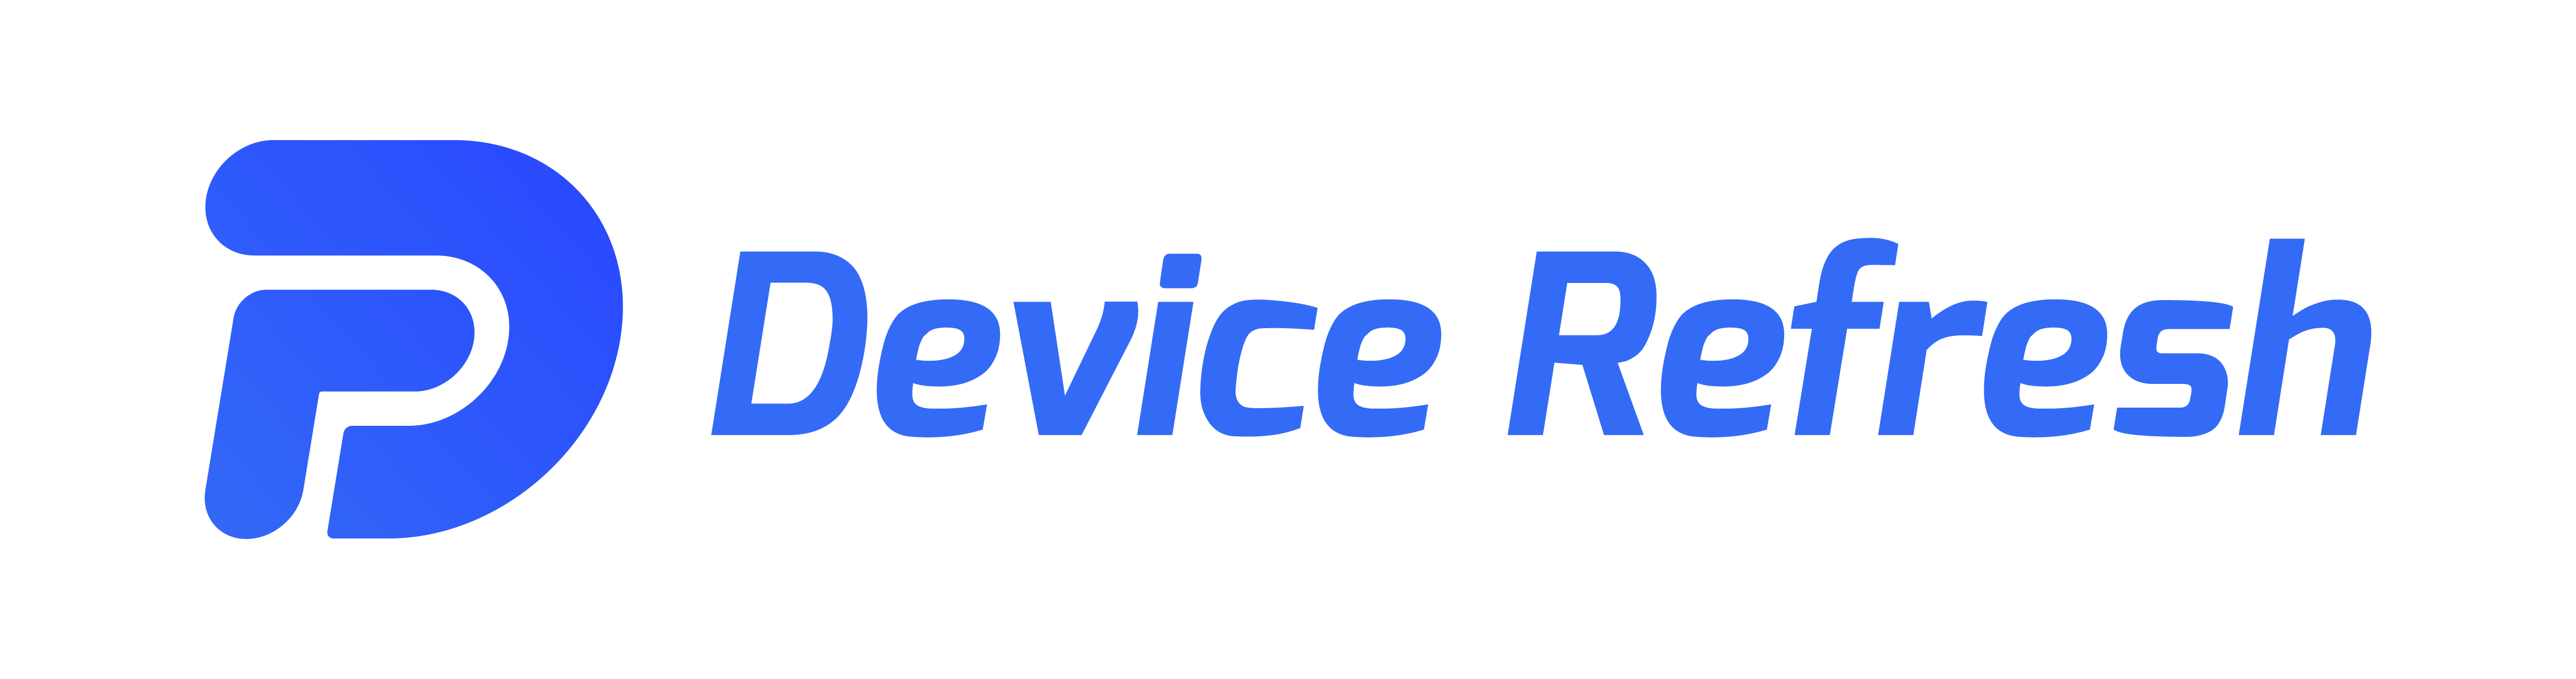 Device Refresh blue logo